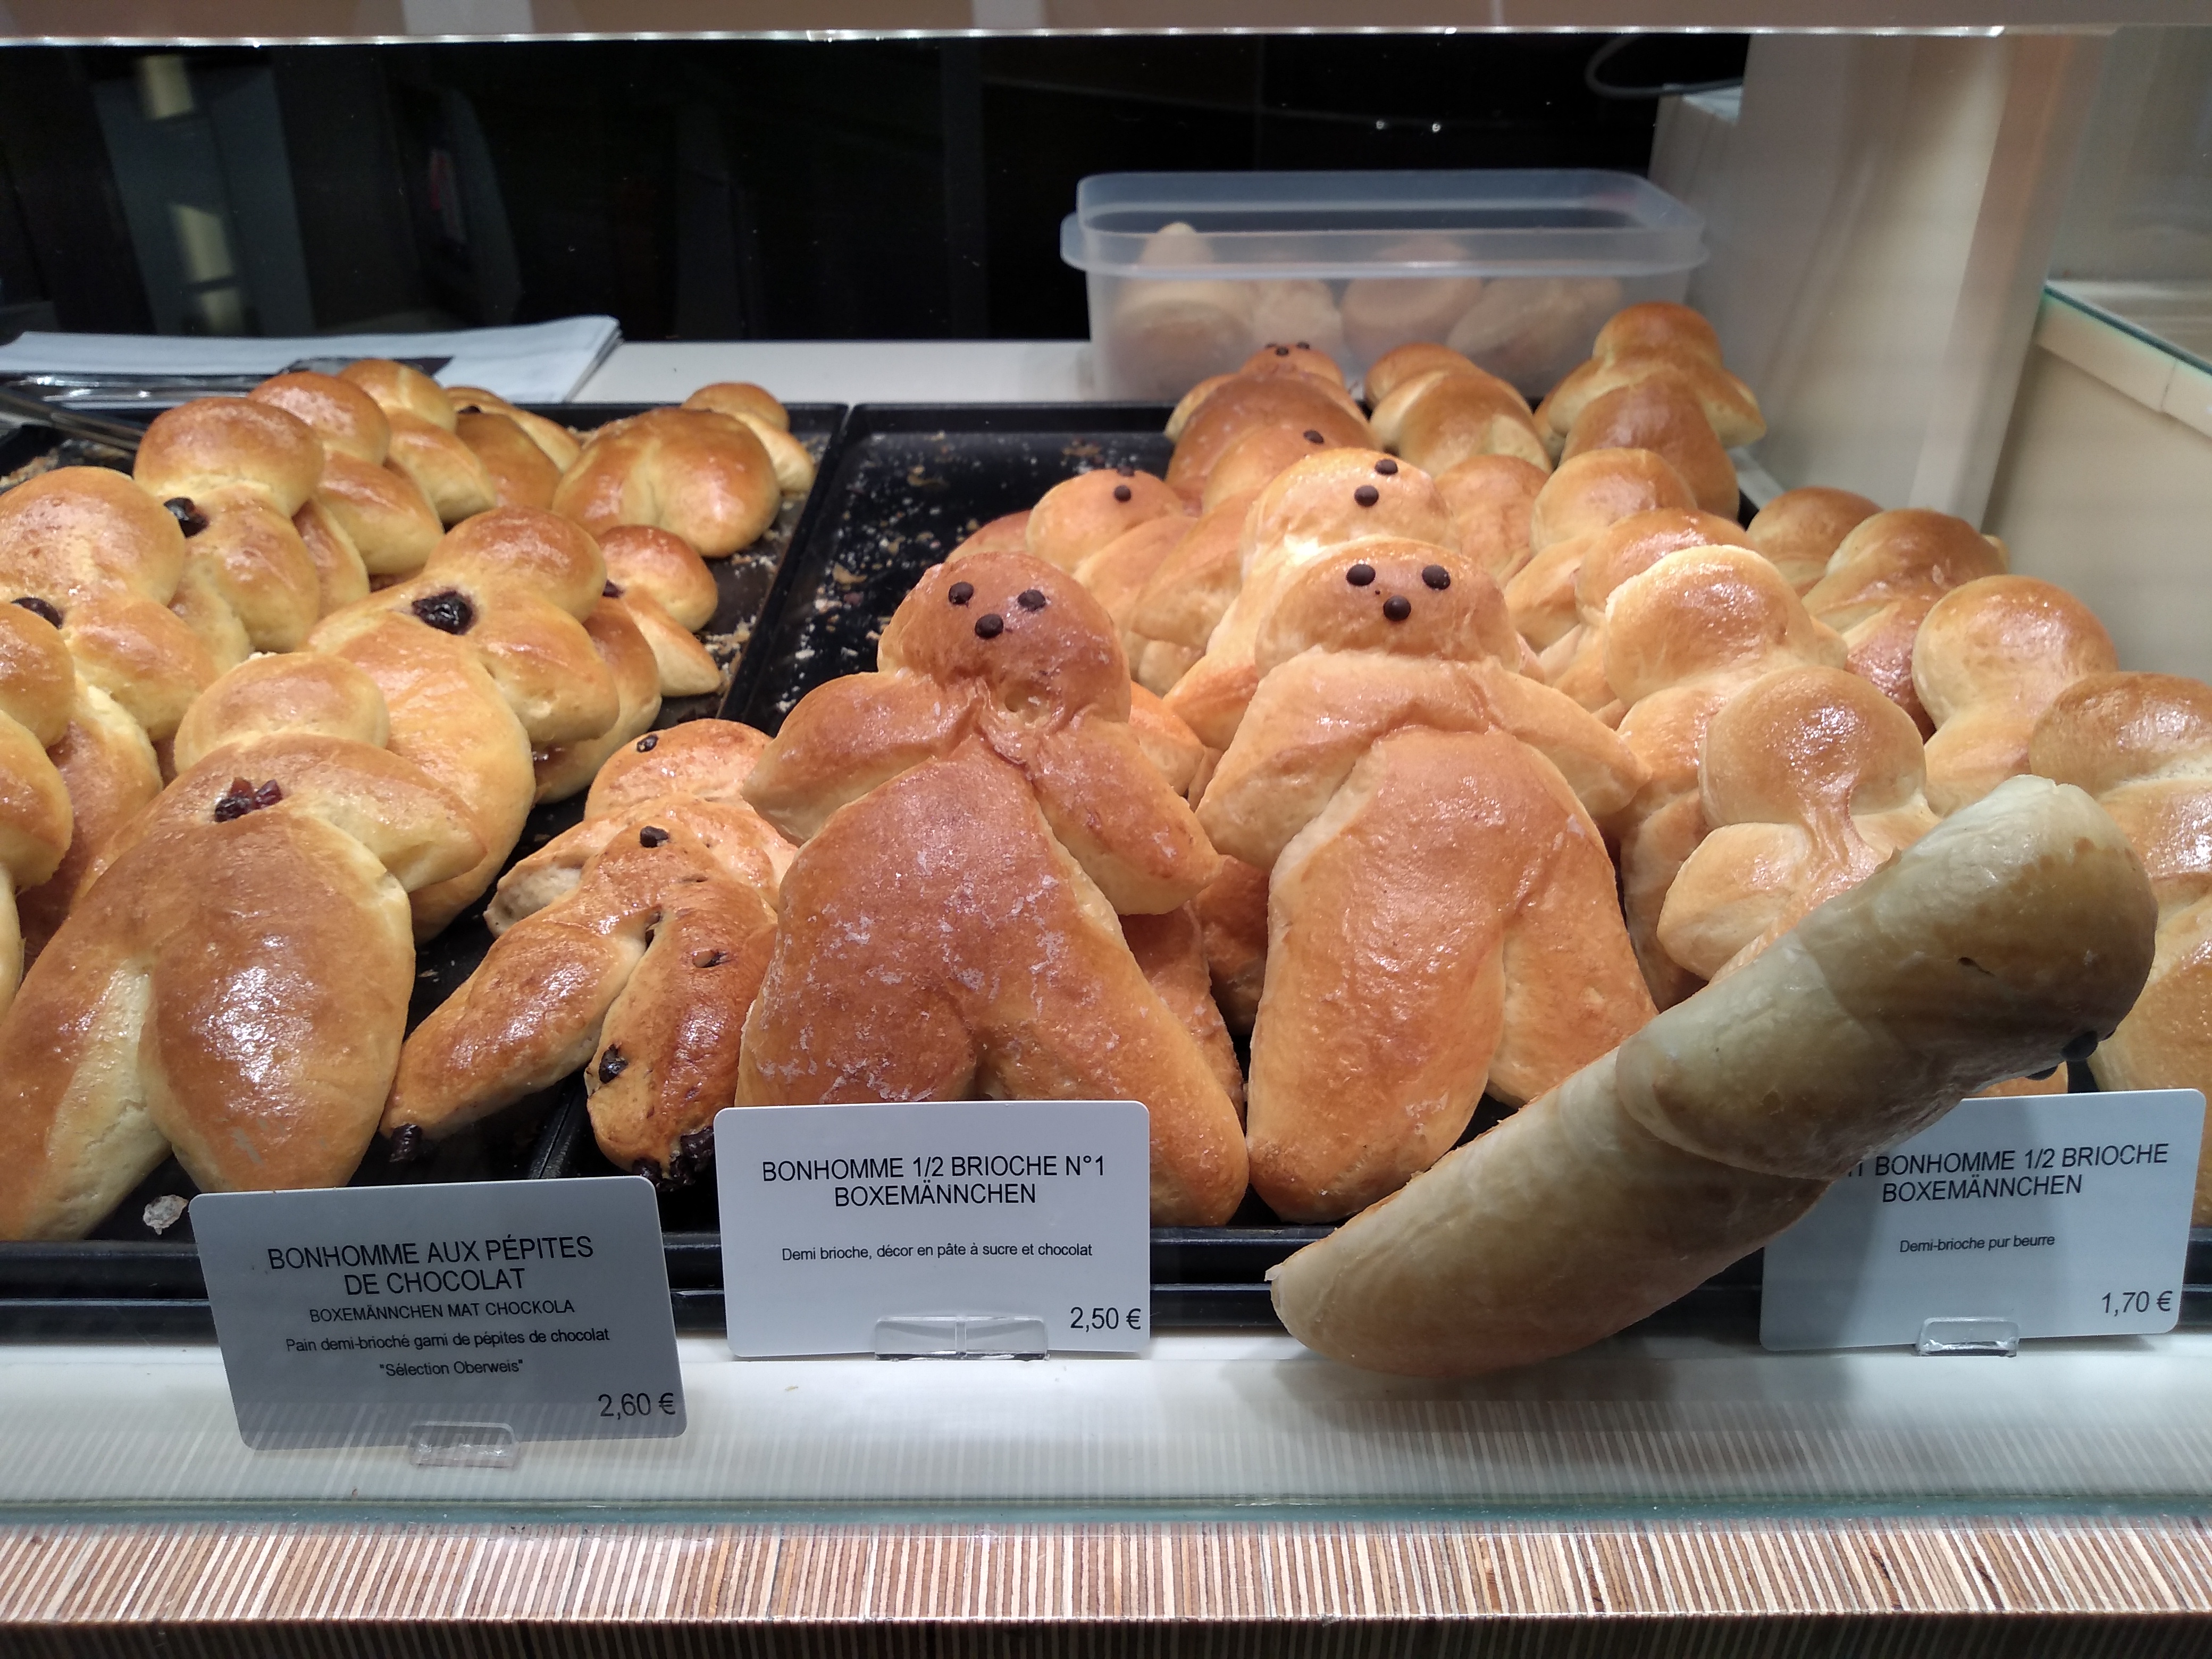 Small bread baked in the shape of gingerbread men in a bakery window